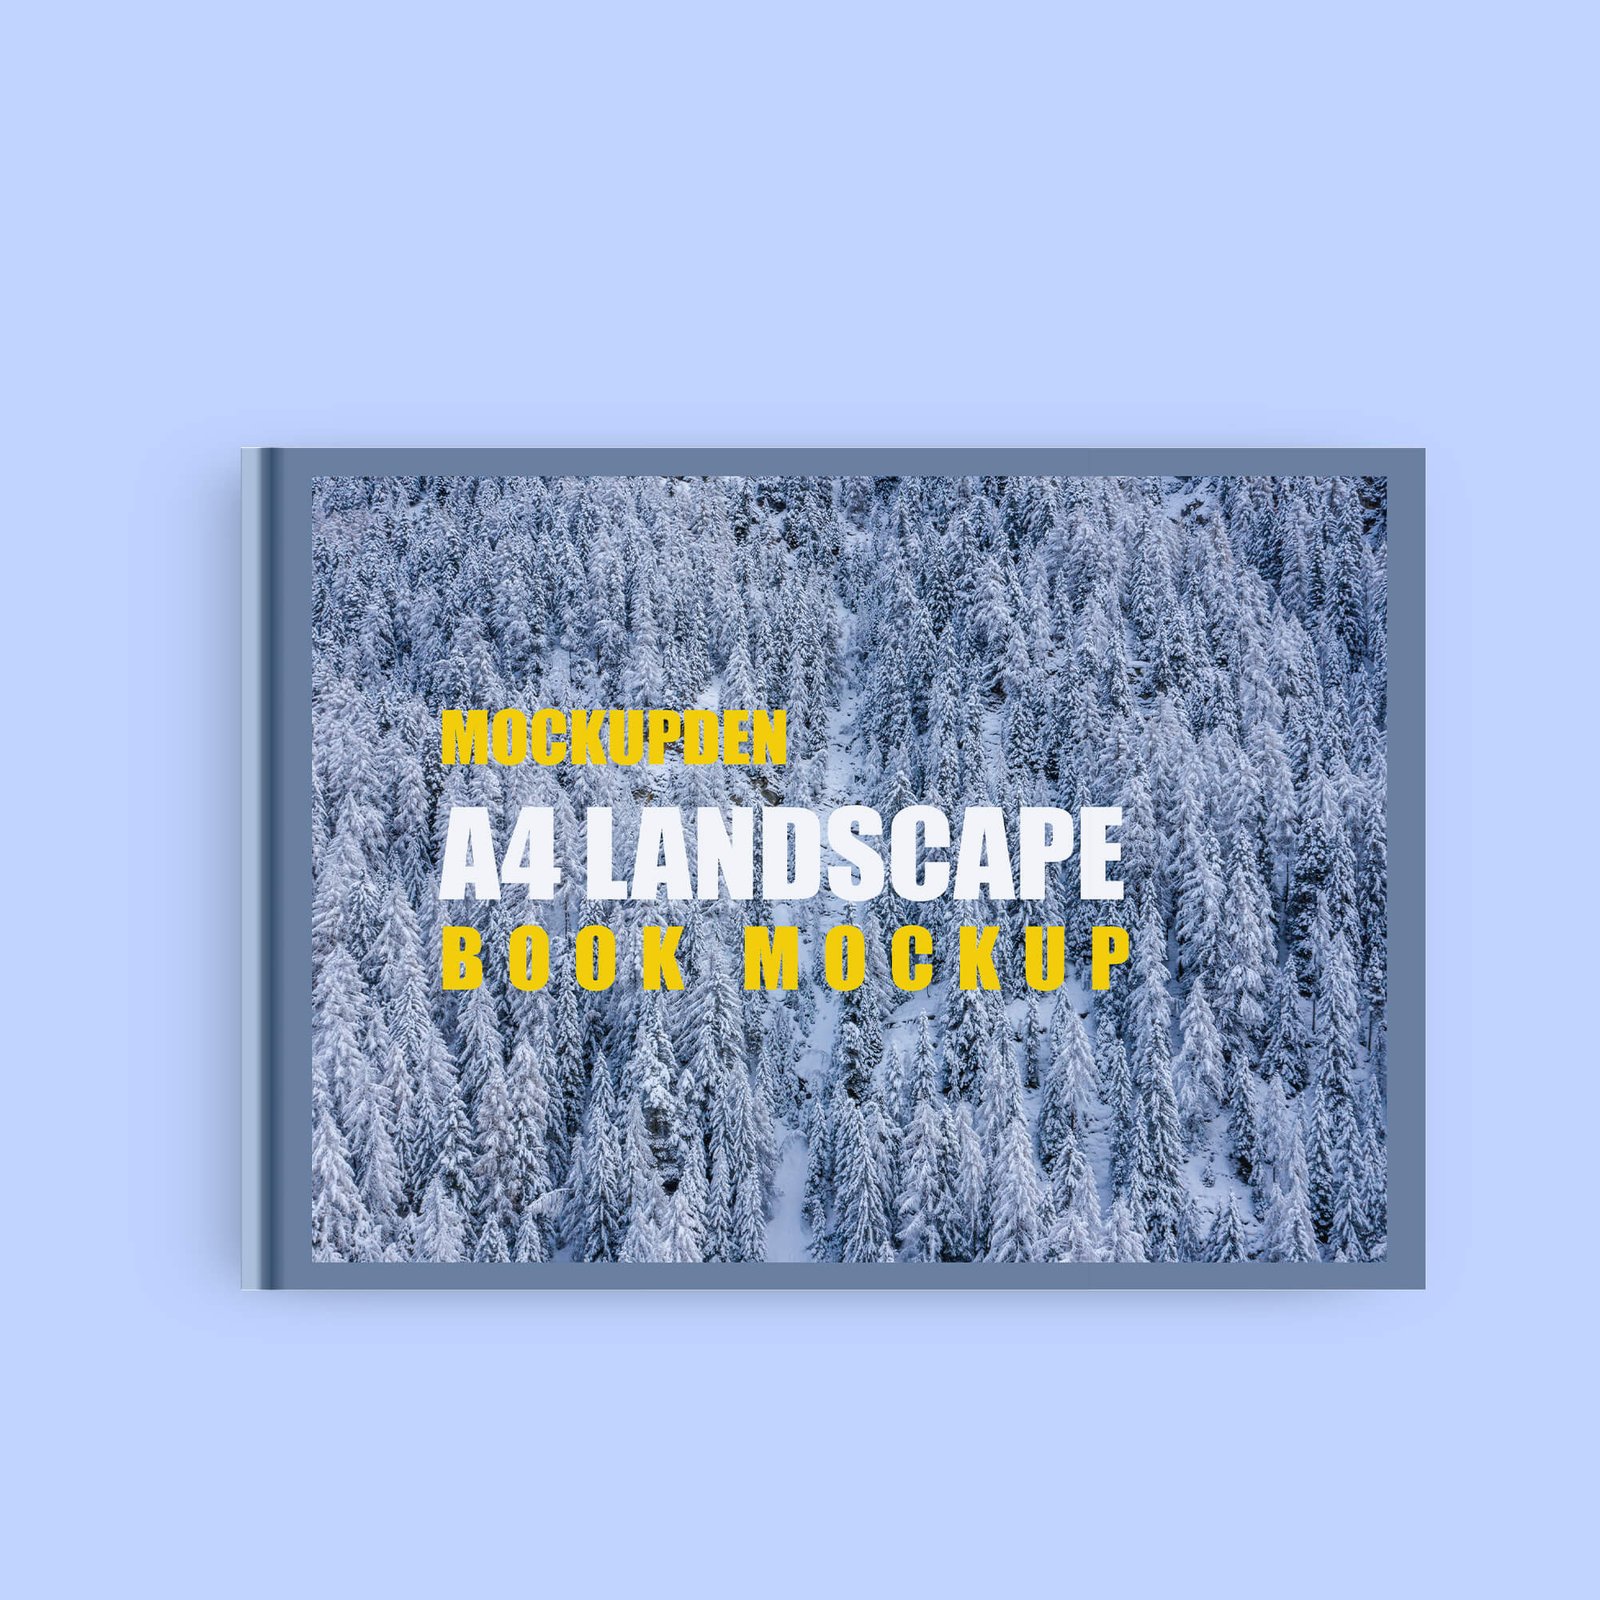 Design Free A4 Landscape Book Mockup PSD Template